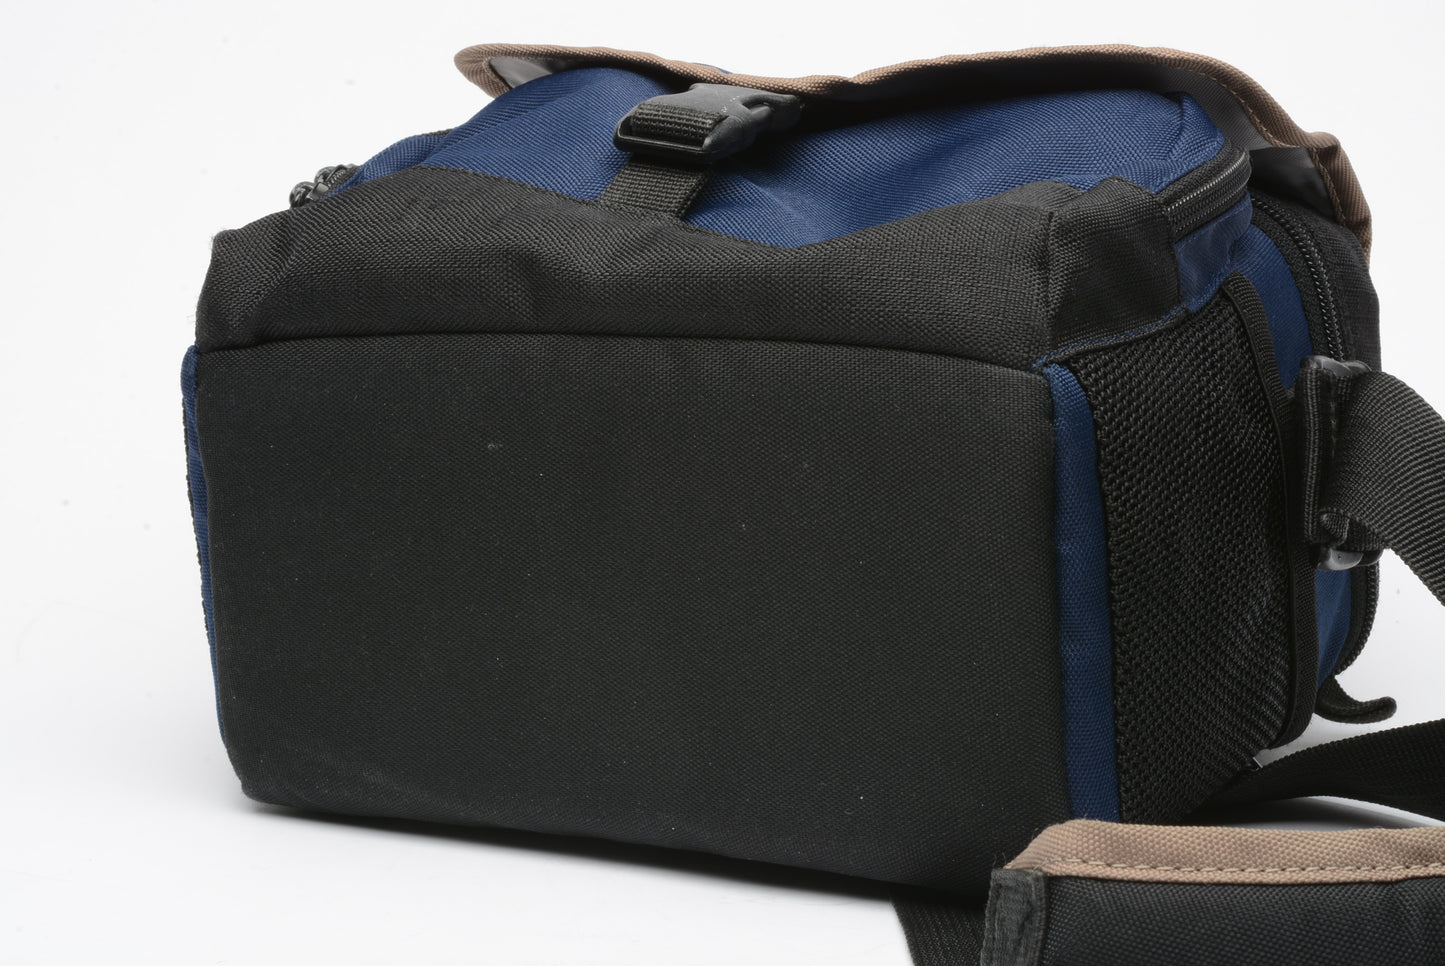 Lowepro Nova 1 camera shoulder bag (Navy), nice and clean